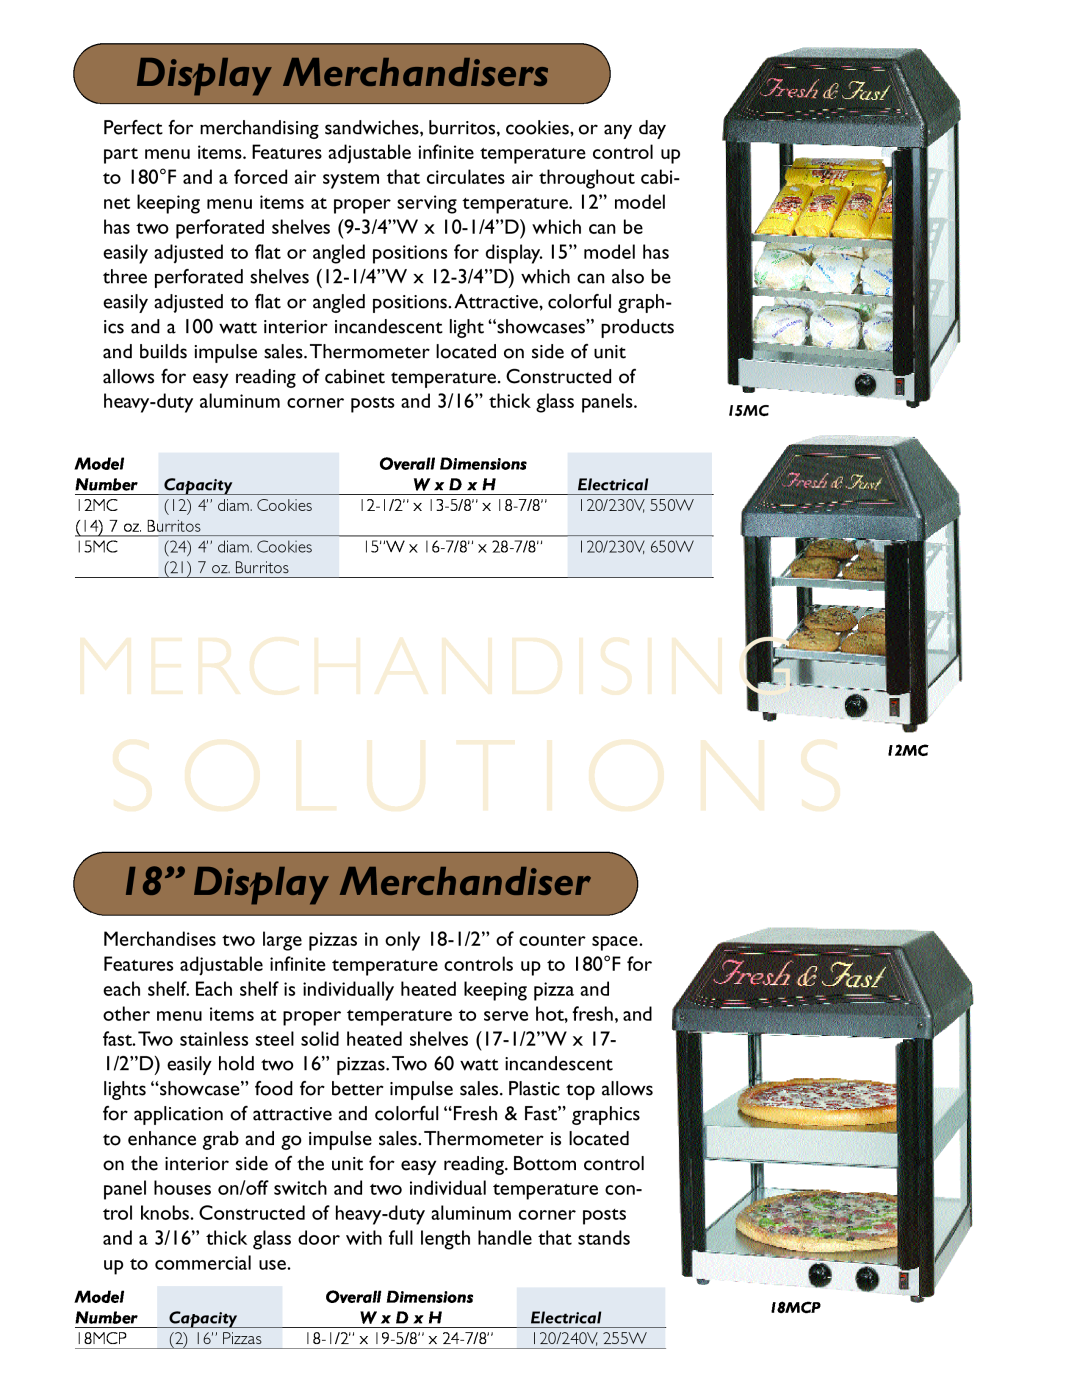 Star Manufacturing HFD2APTCR, HFD-1 Merchandising, Display Merchandisers, 18” Display Merchandiser, S O L U T I O N S 12MC 